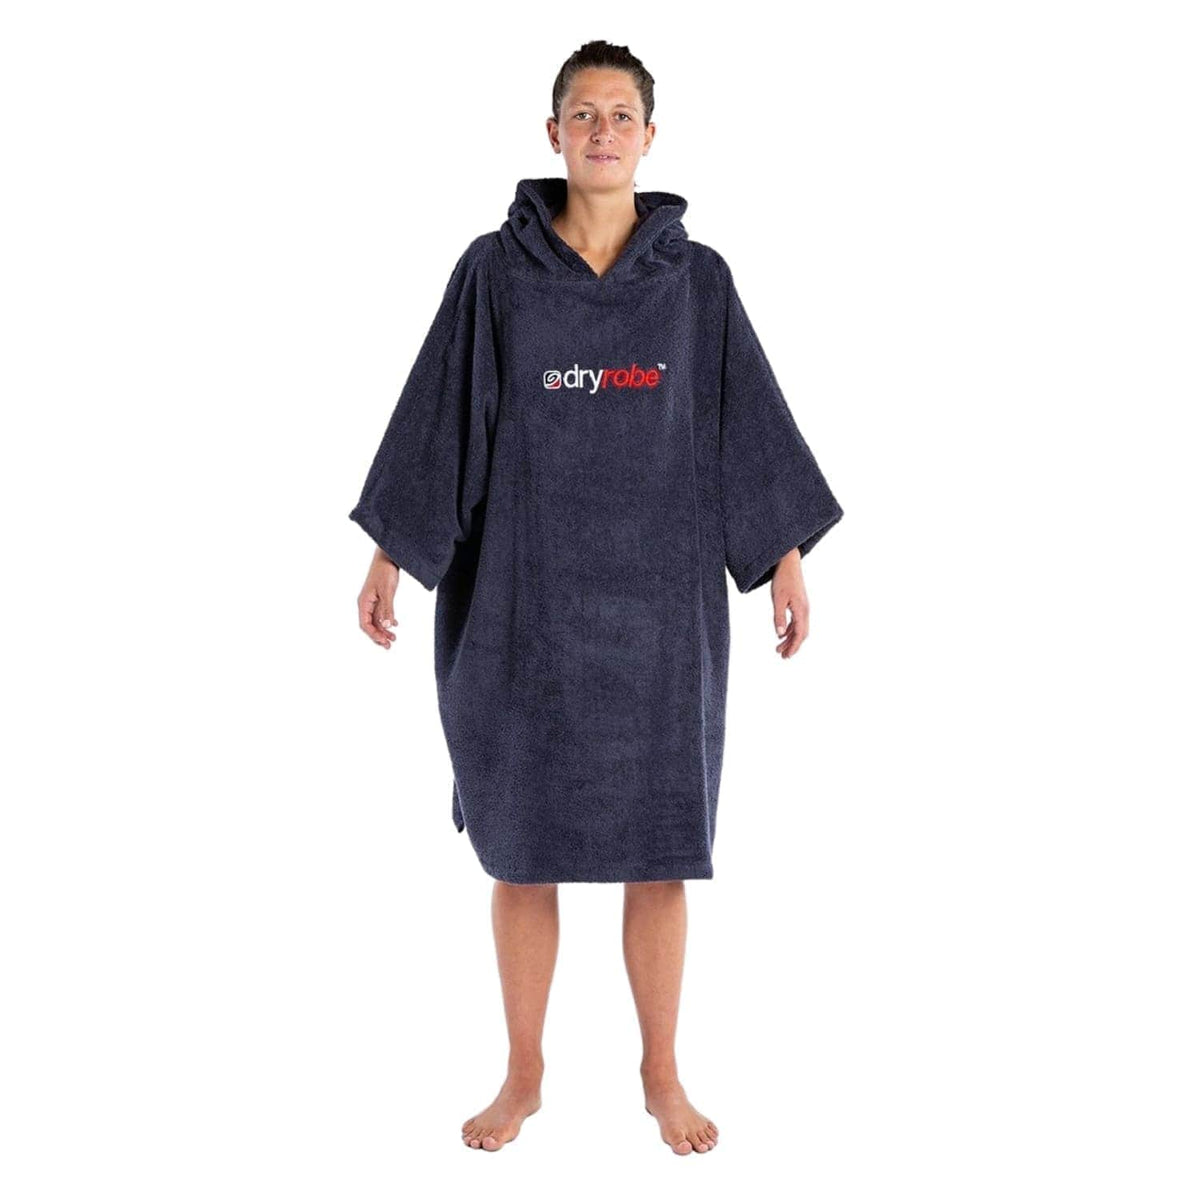 Dryrobe Organic Cotton Short Sleeve Towel Dryrobe - Navy - Changing Robe Poncho Towel by Dryrobe M